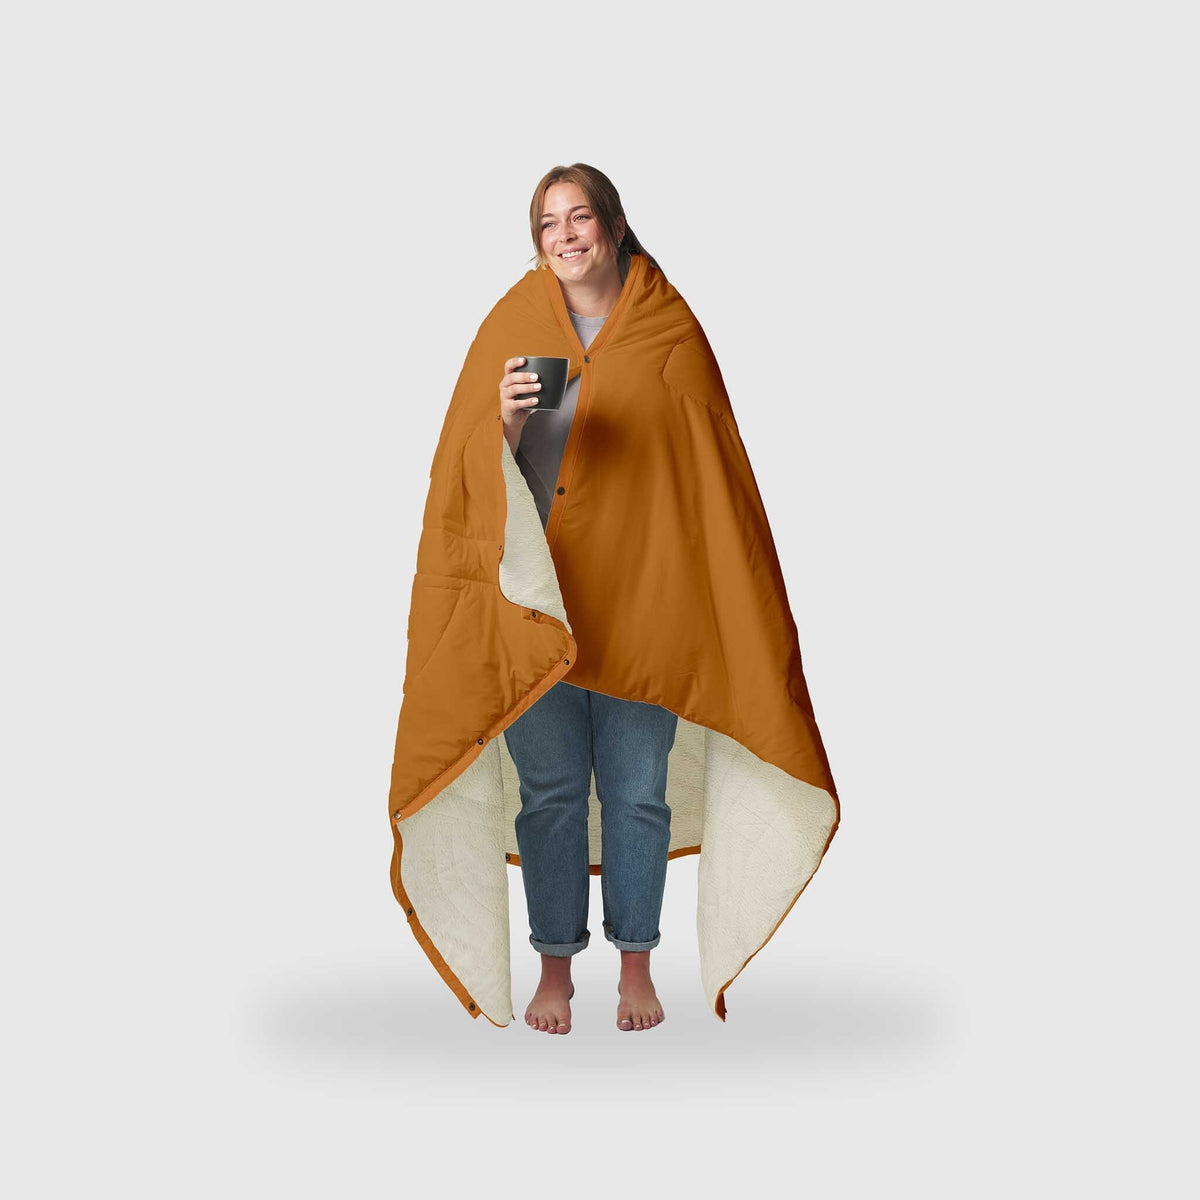 VOITED CloudTouch® Indoor/Outdoor Camping Blanket - Sundial